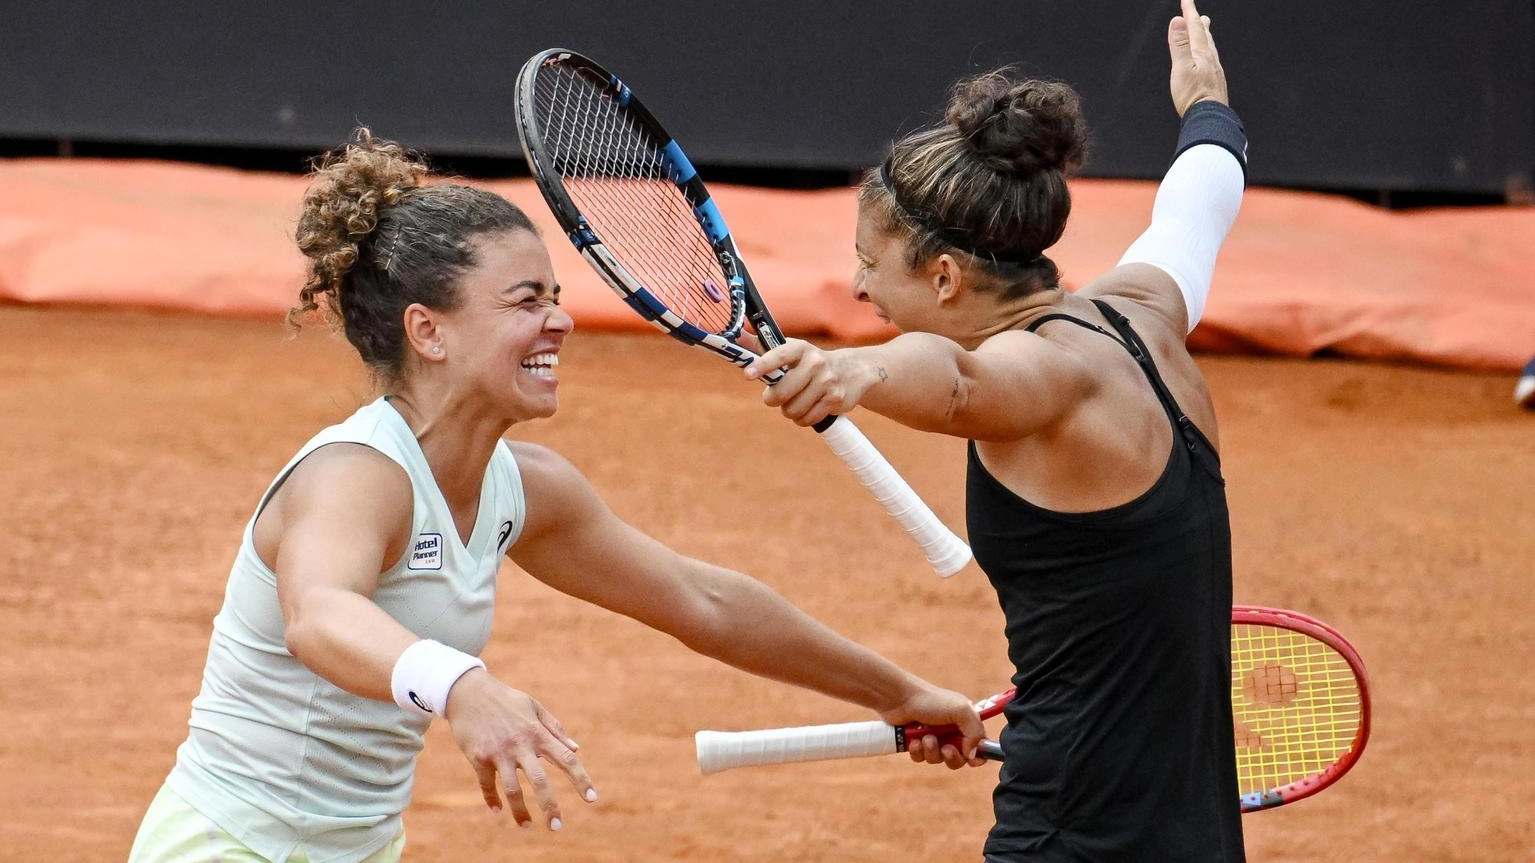 Jasmine Paolini e Sara Errani a caccia dell'impresa al Roland Garros